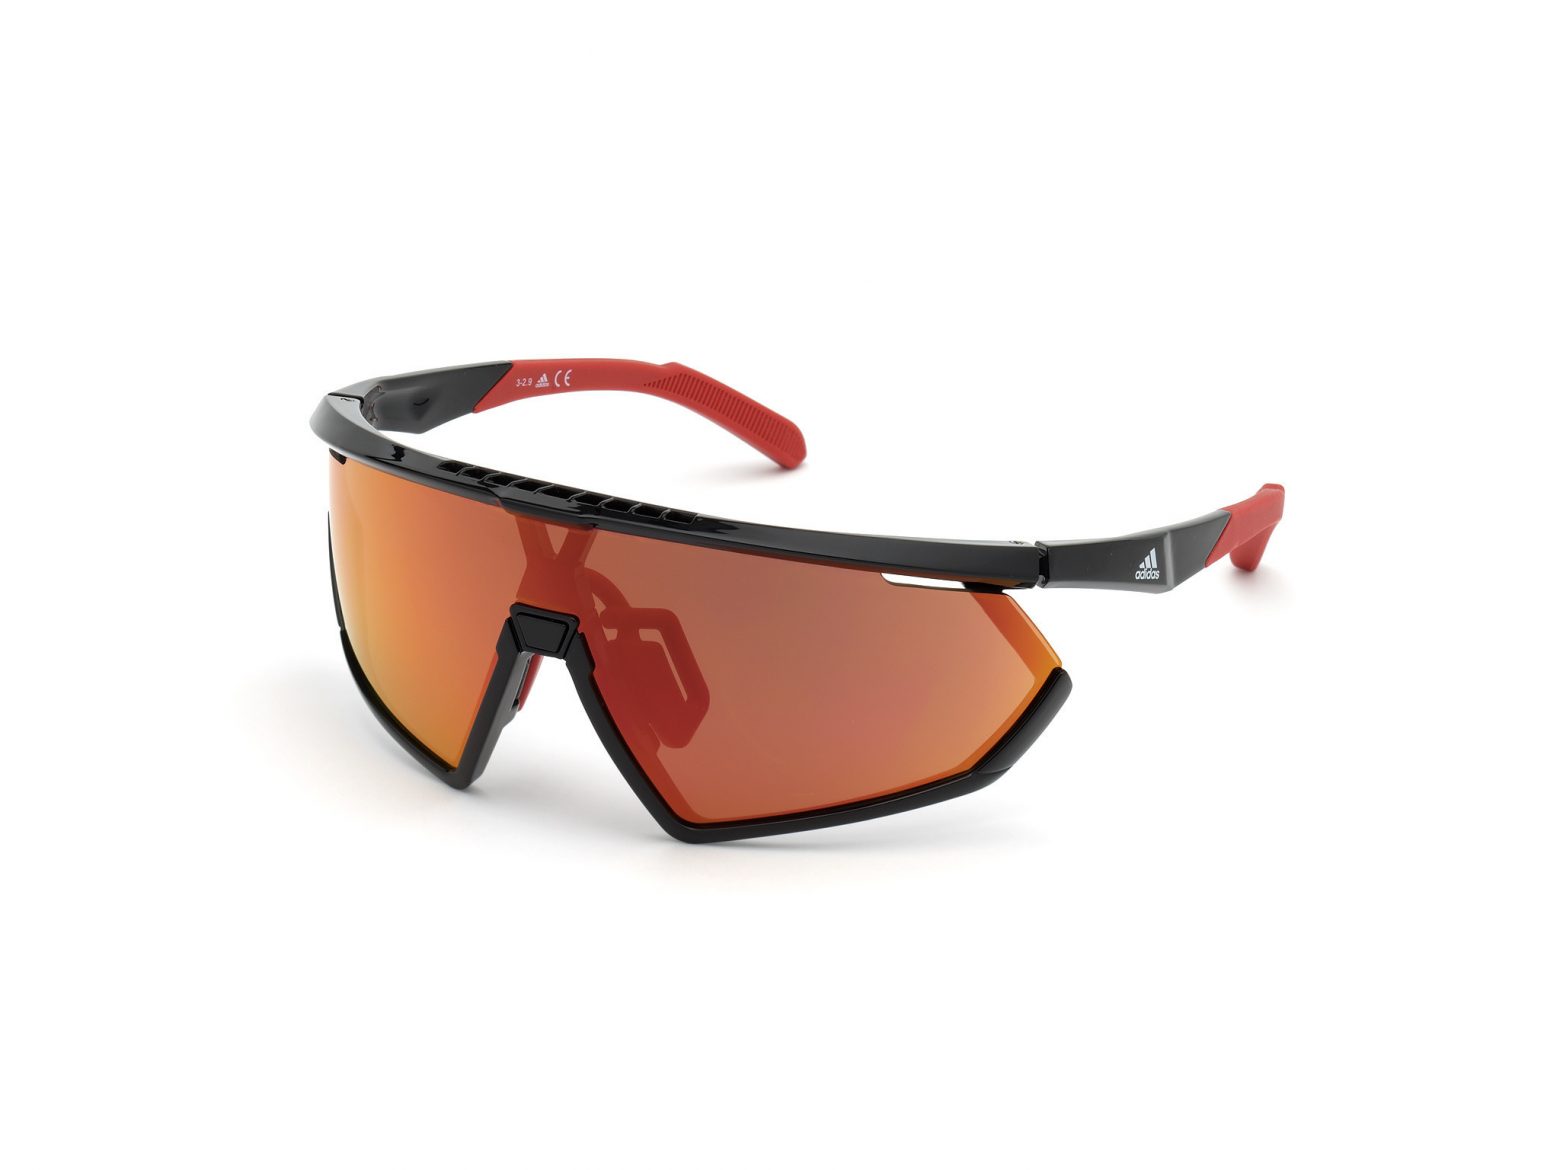 hoesten Kijker verkopen Adidas SP0001 Sunglasses by Adidas | Shop Sunglasses